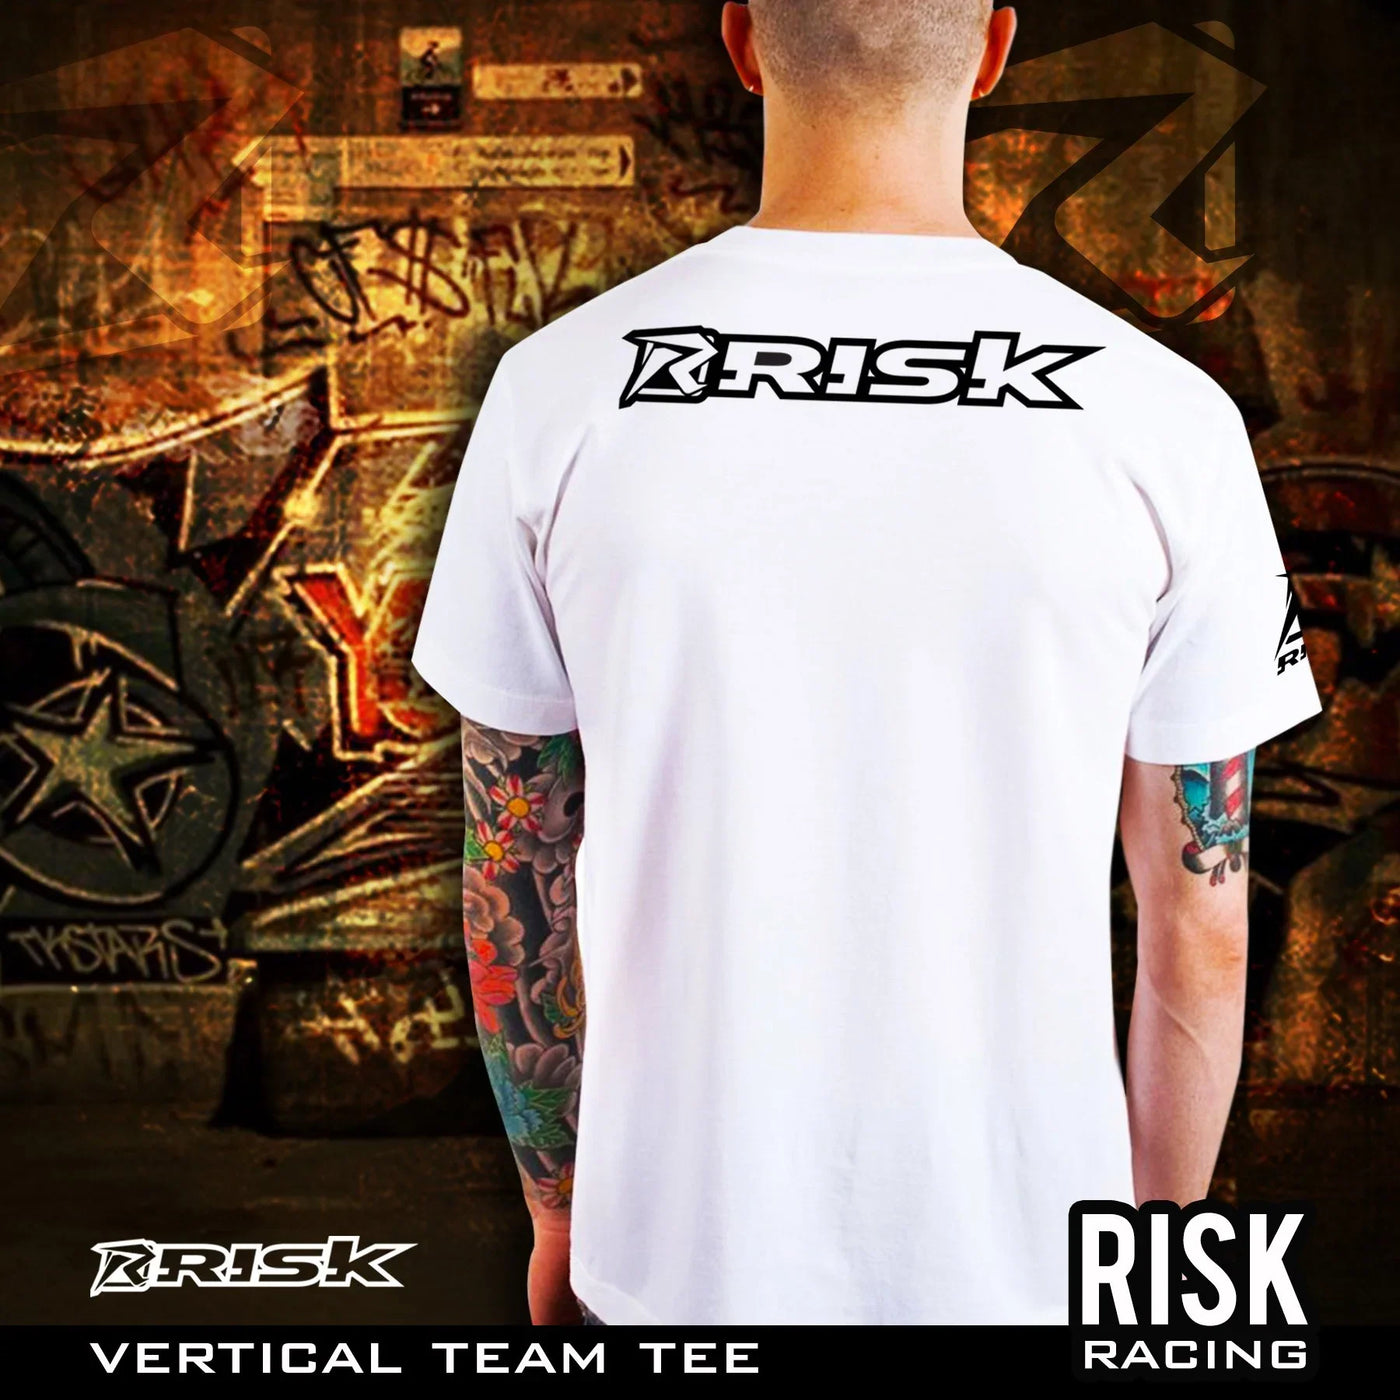 Risk Racing T Shirt - Vertical, Small